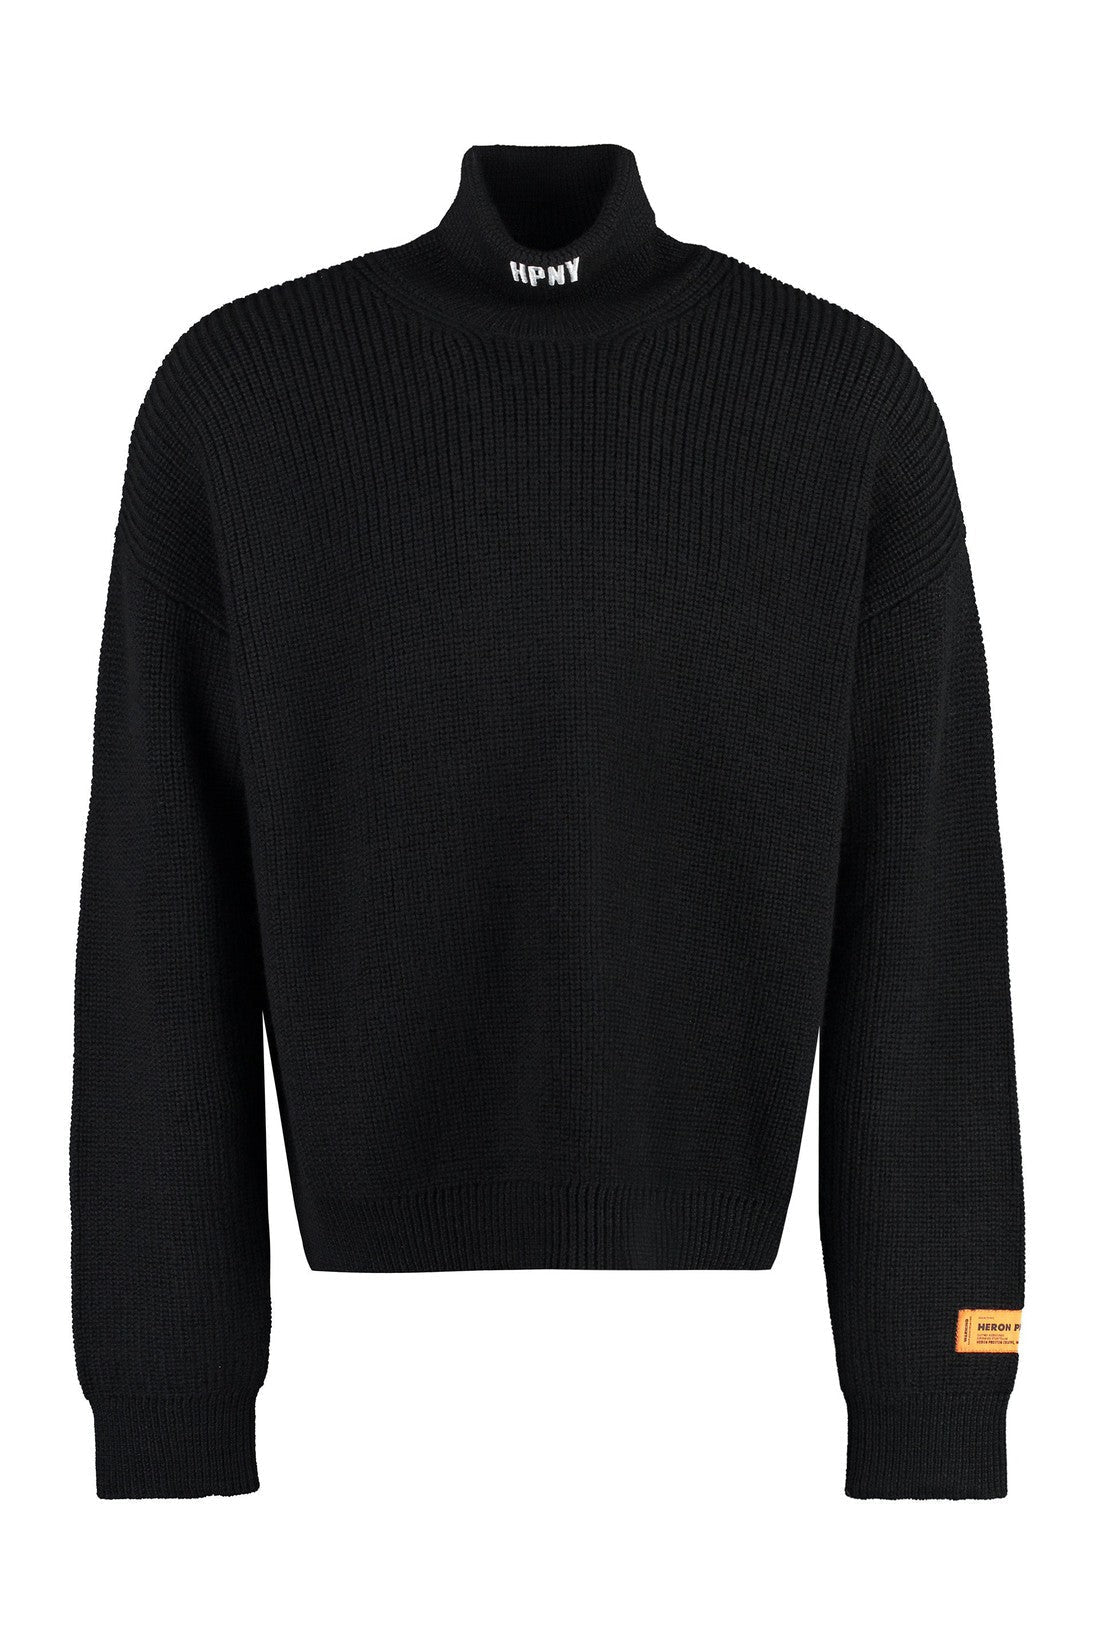 Heron Preston-OUTLET-SALE-Wool turtleneck sweater-ARCHIVIST